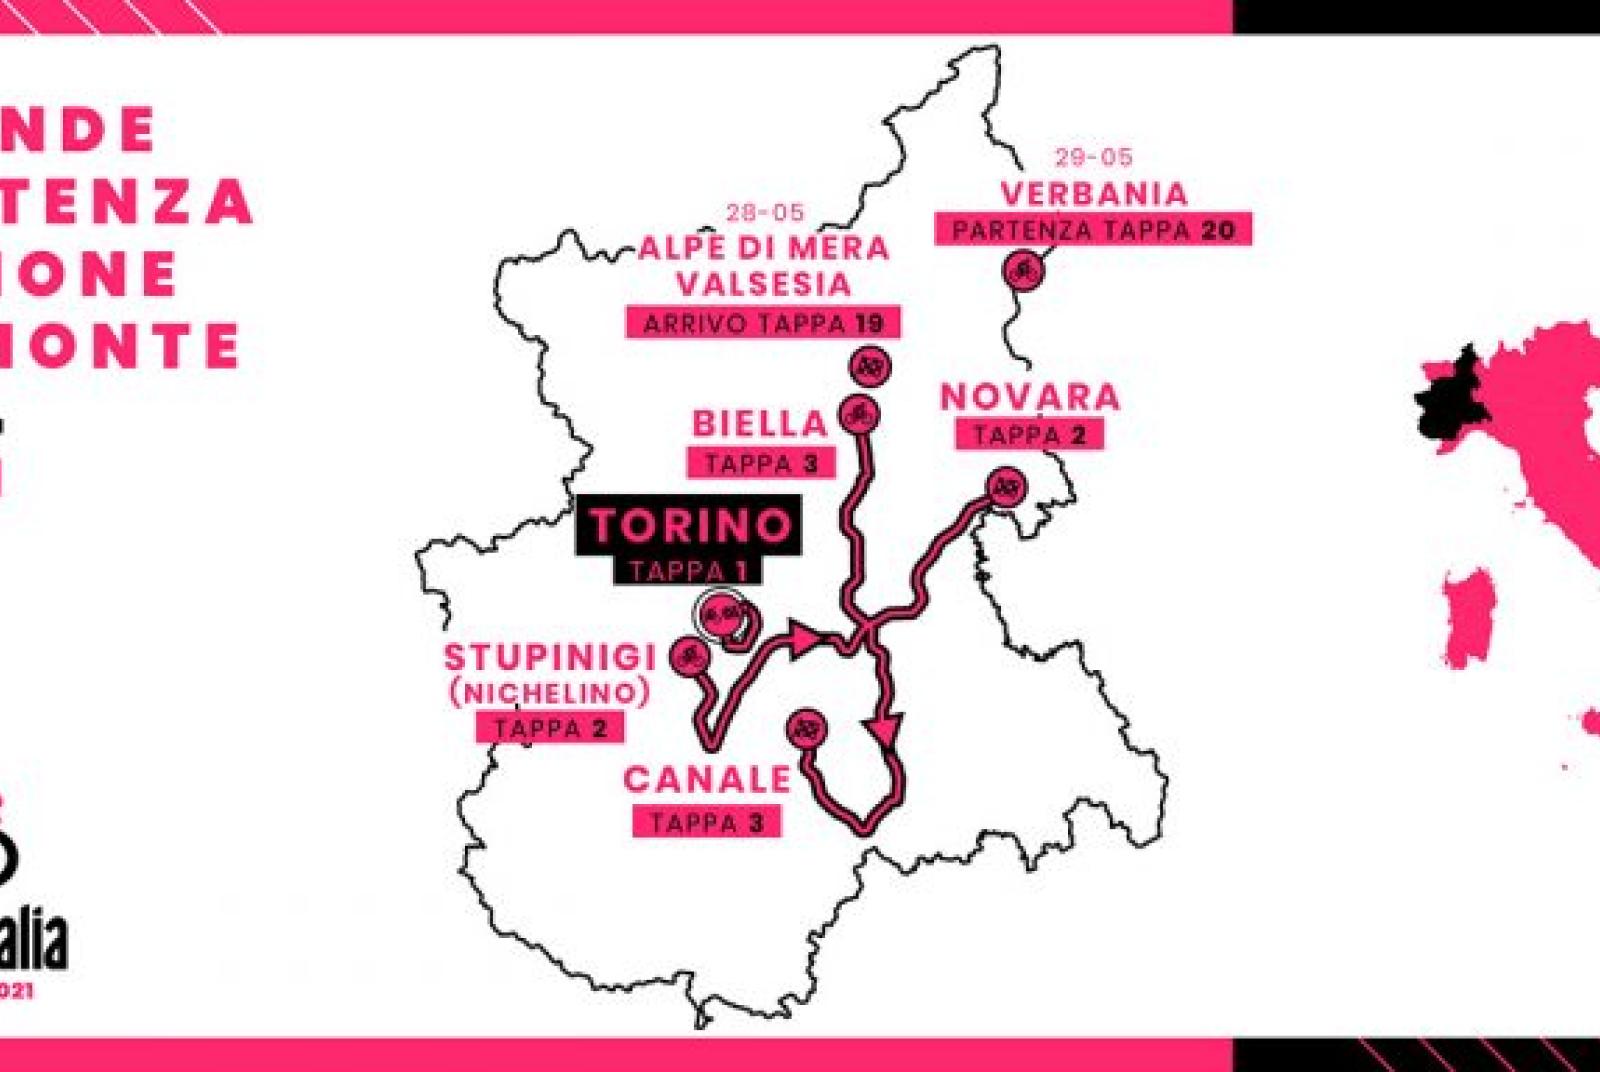 The big sporting events in Valsesia: Giro d’Italia in Mera and Monte Rosa Skymarathon in Alagna